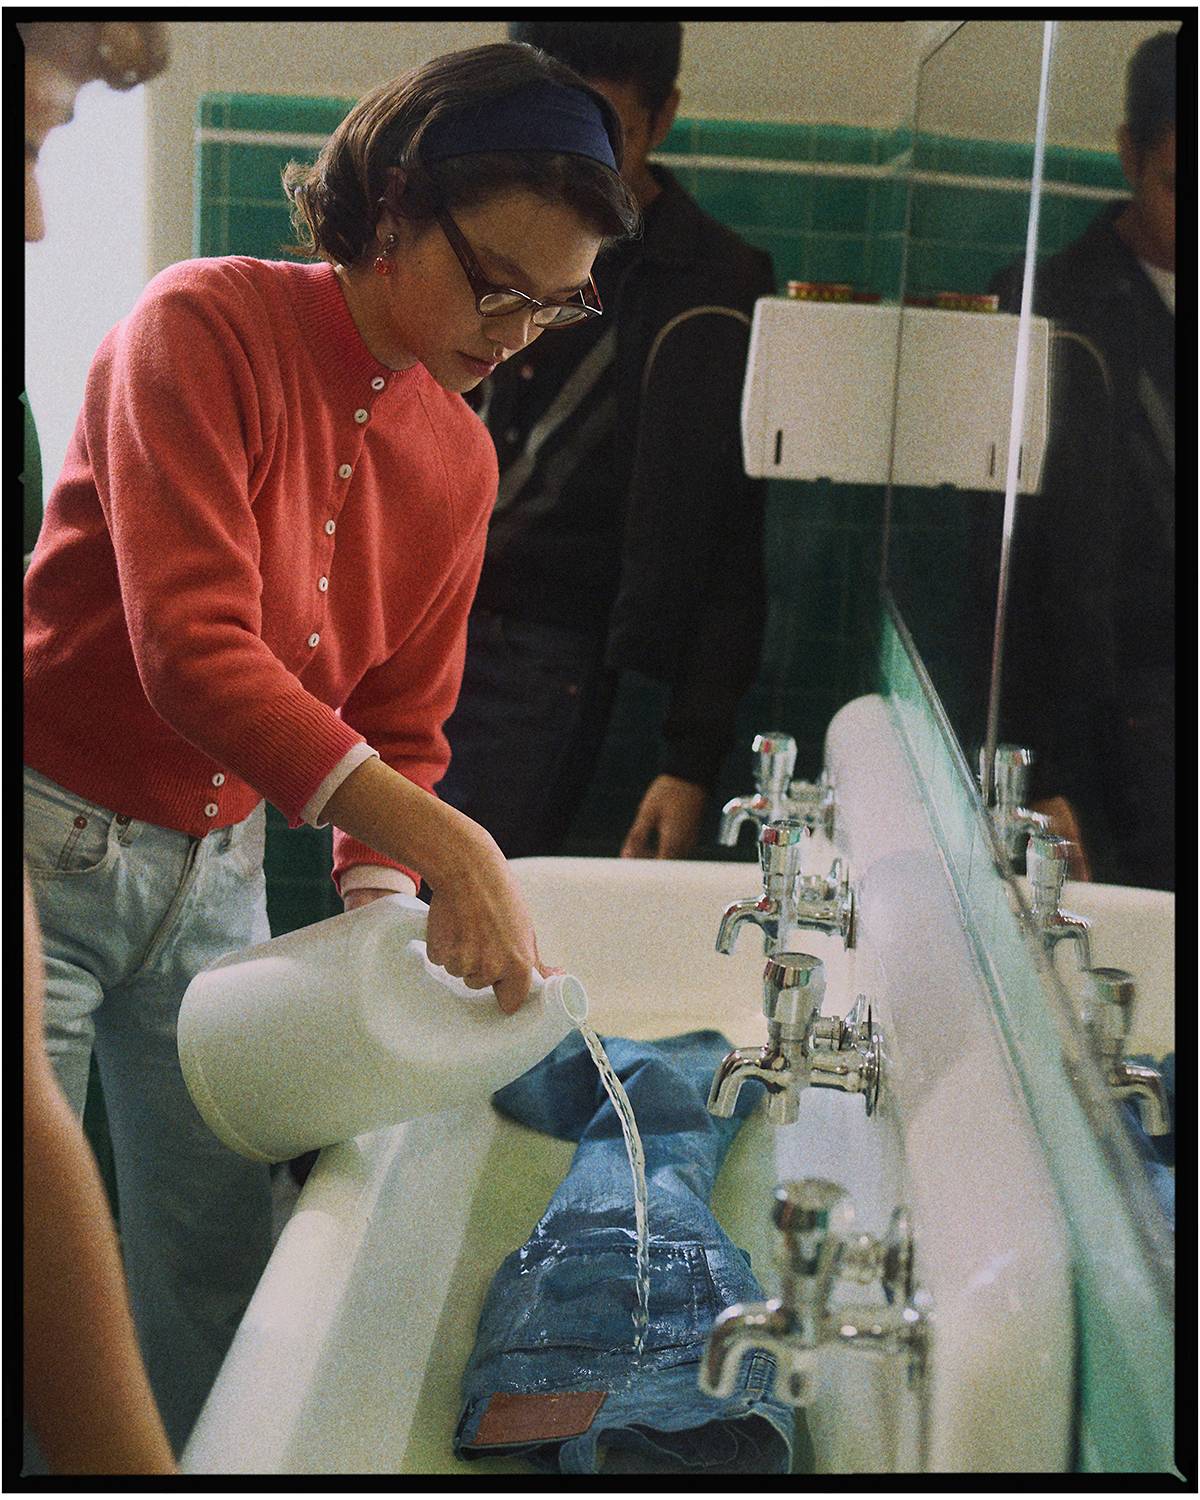 People bleaching their jeans in a bathroom.